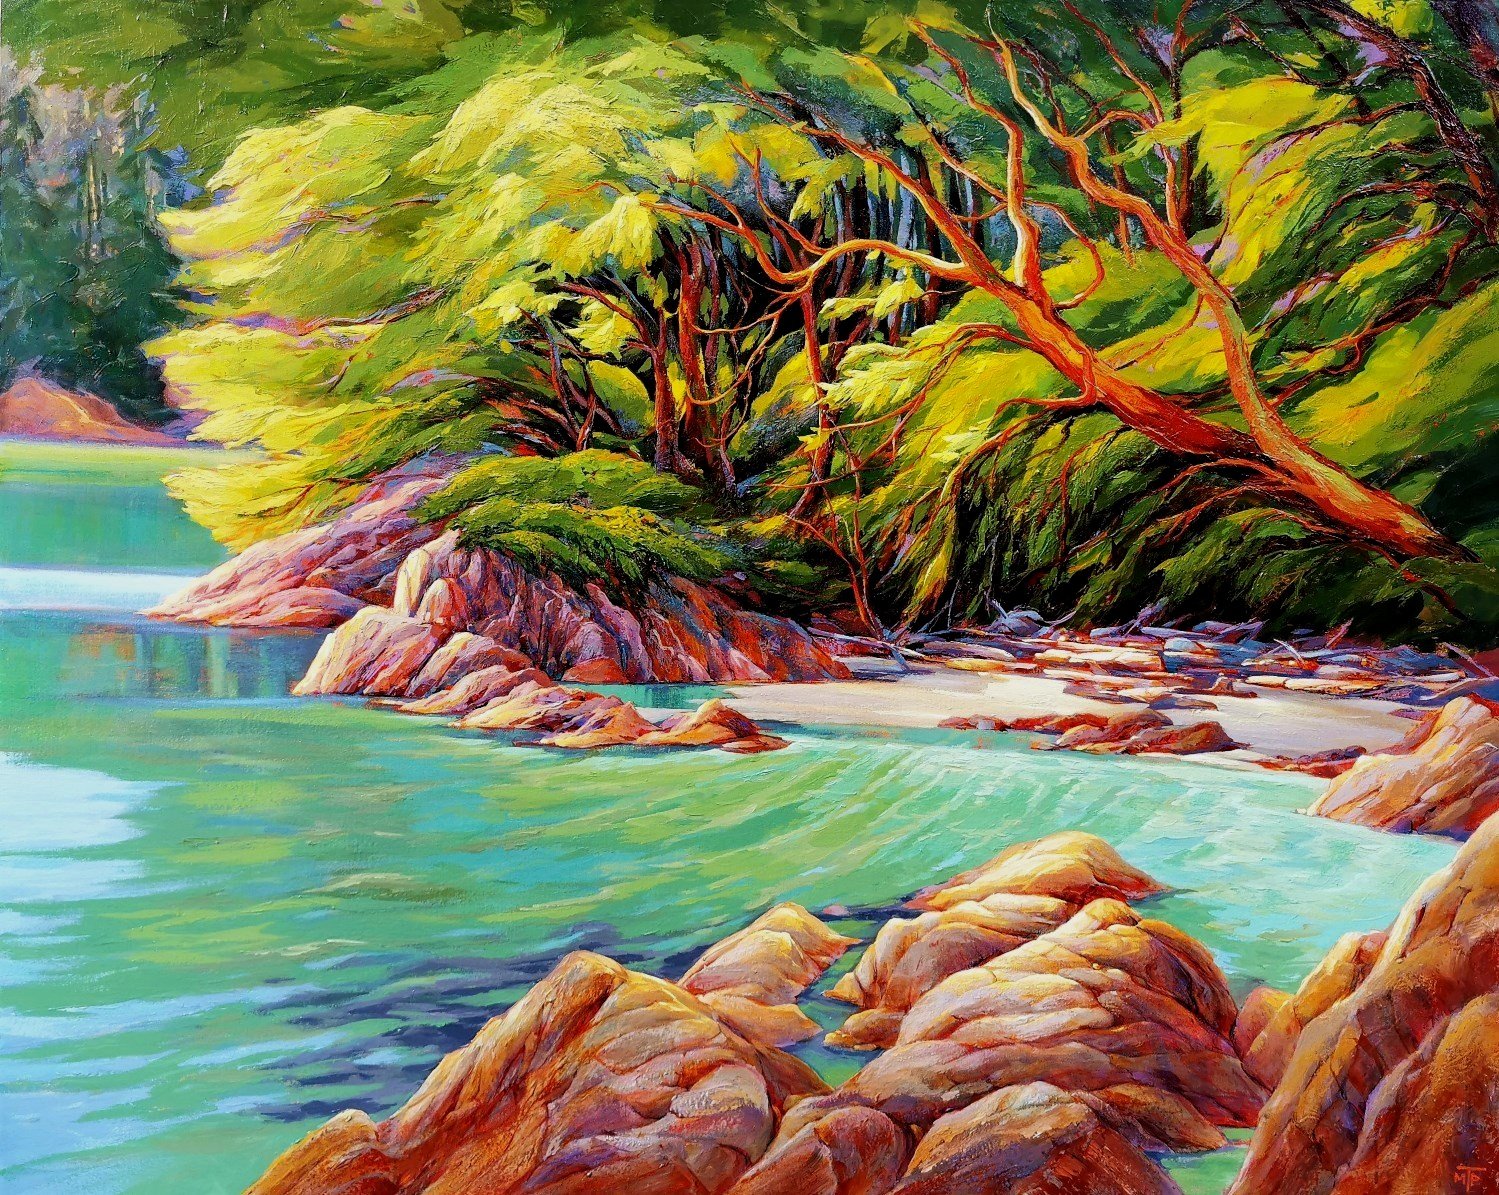  Island Respite   Acrylic on canvas, 48x60 inches, $7,000  